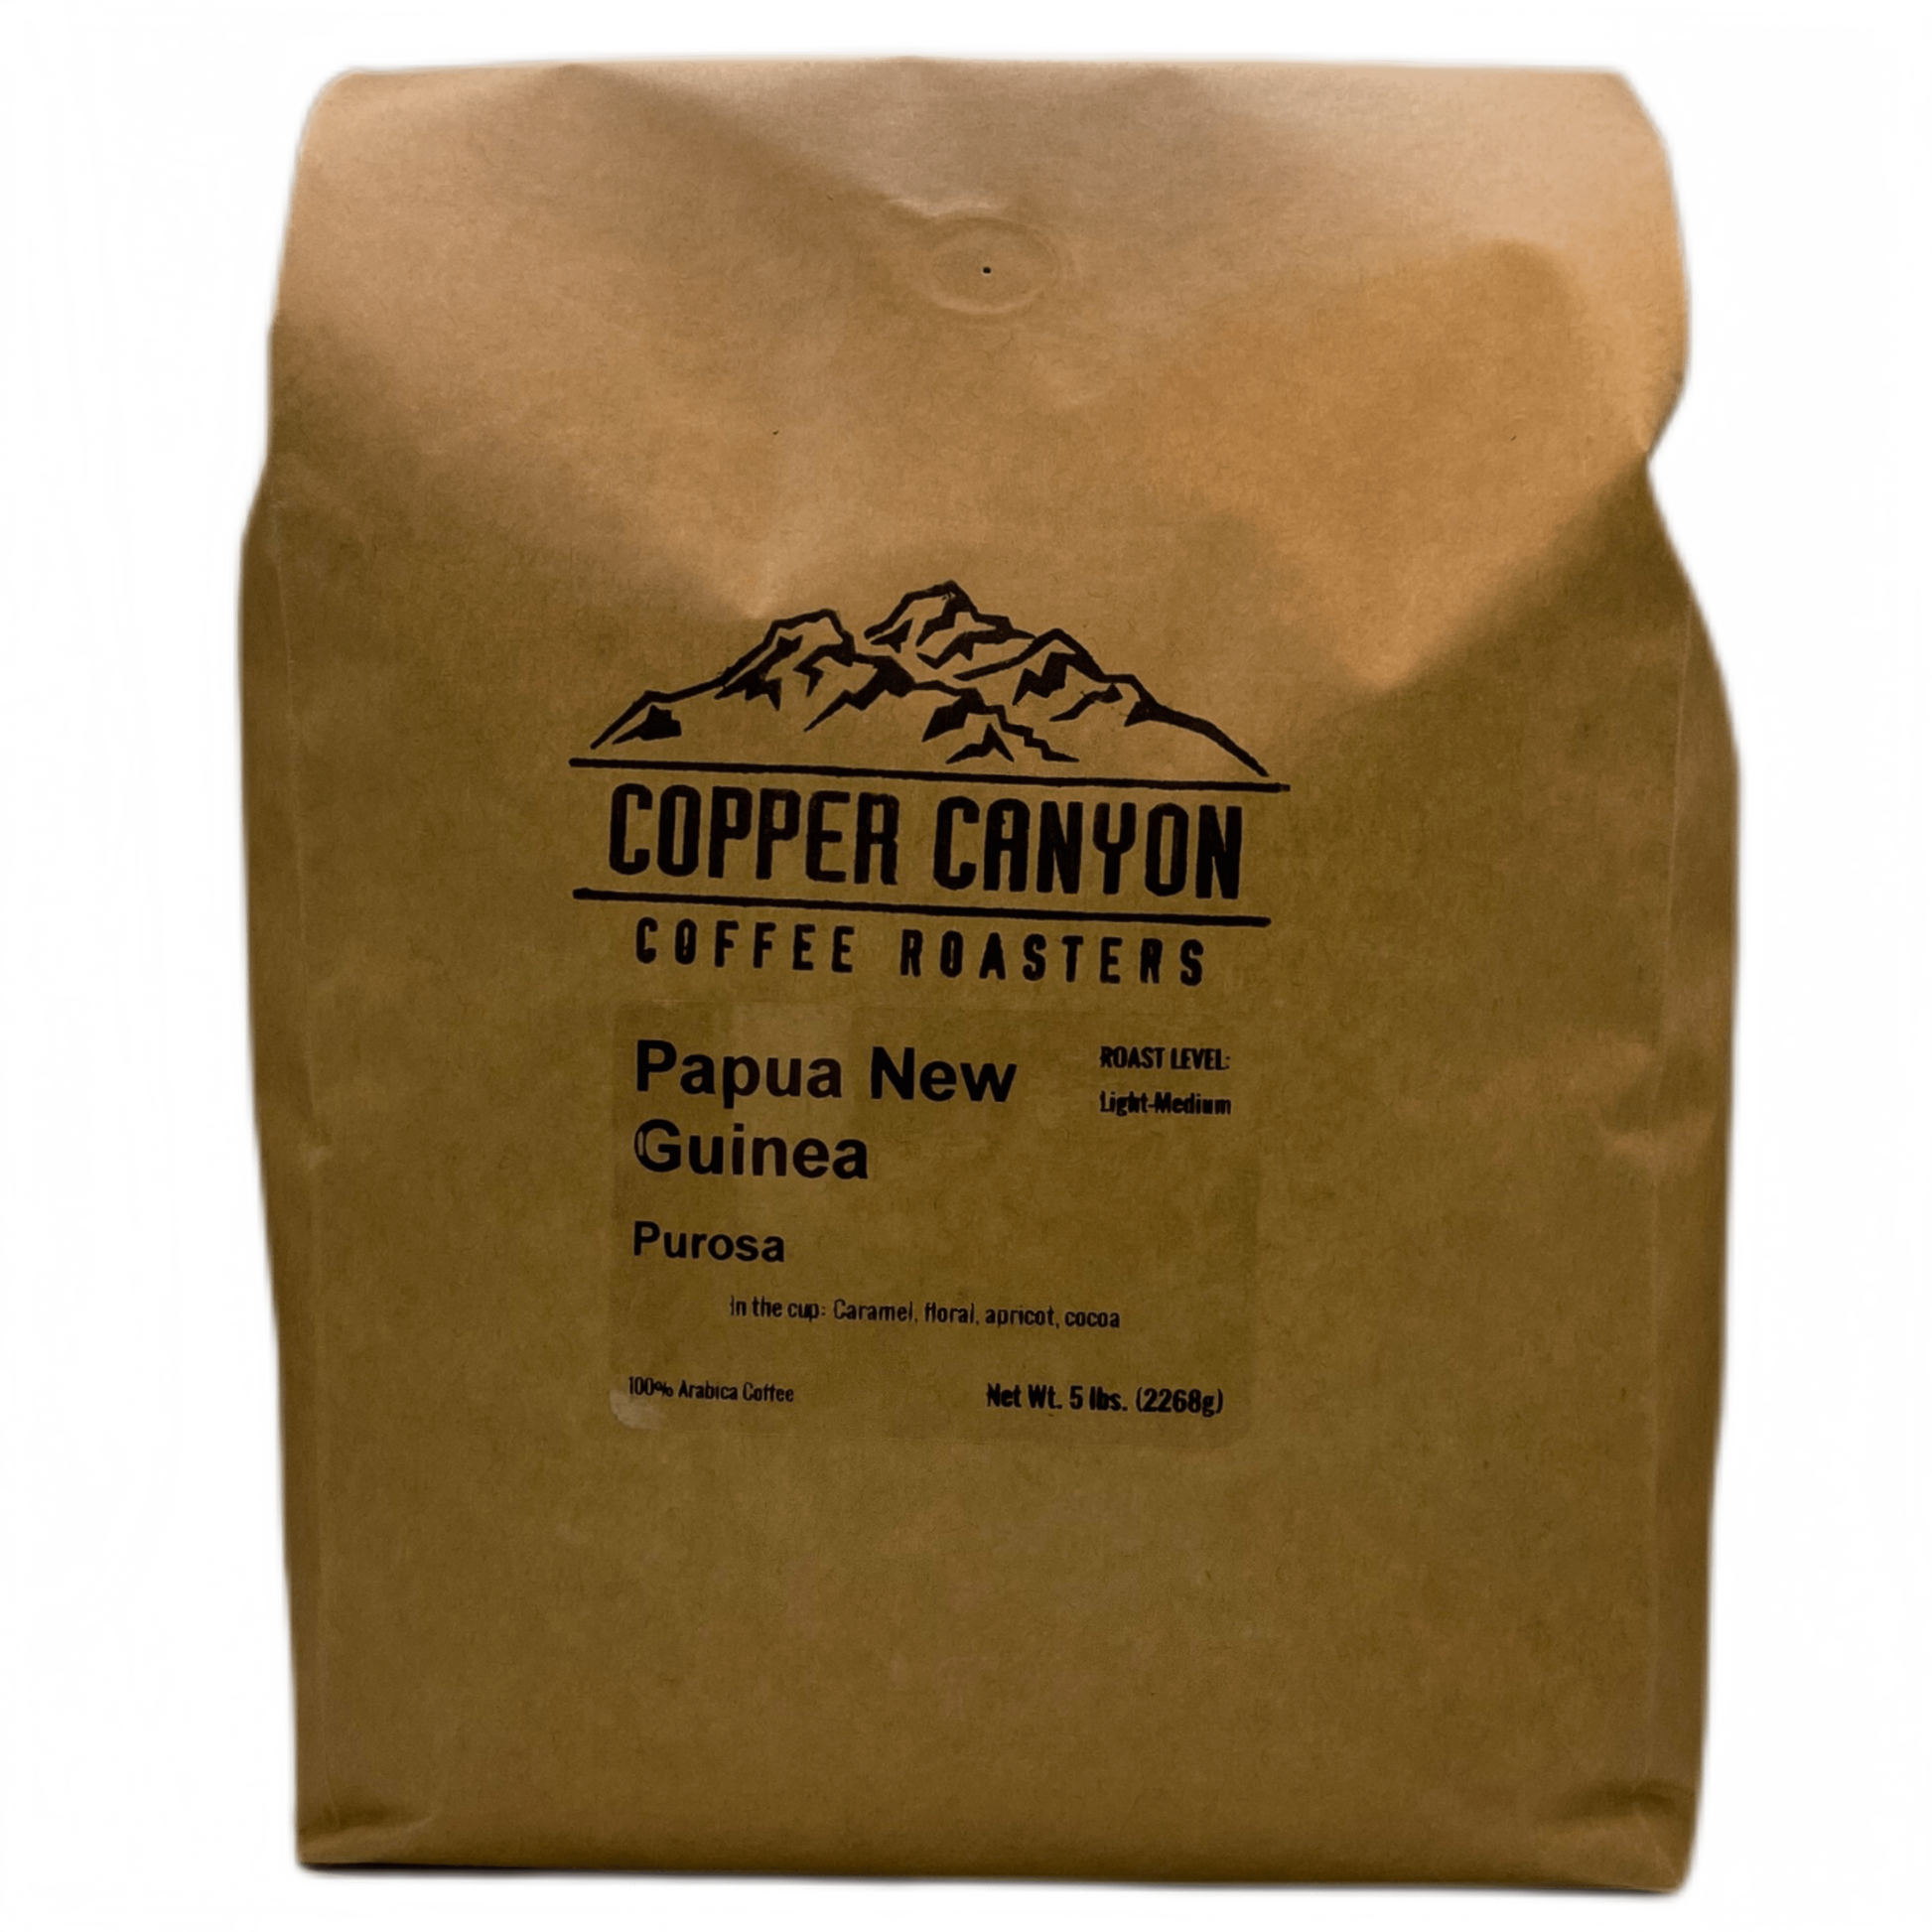 5 pound bag of Papua New Guinea light-medium roast coffee by Copper Canyon